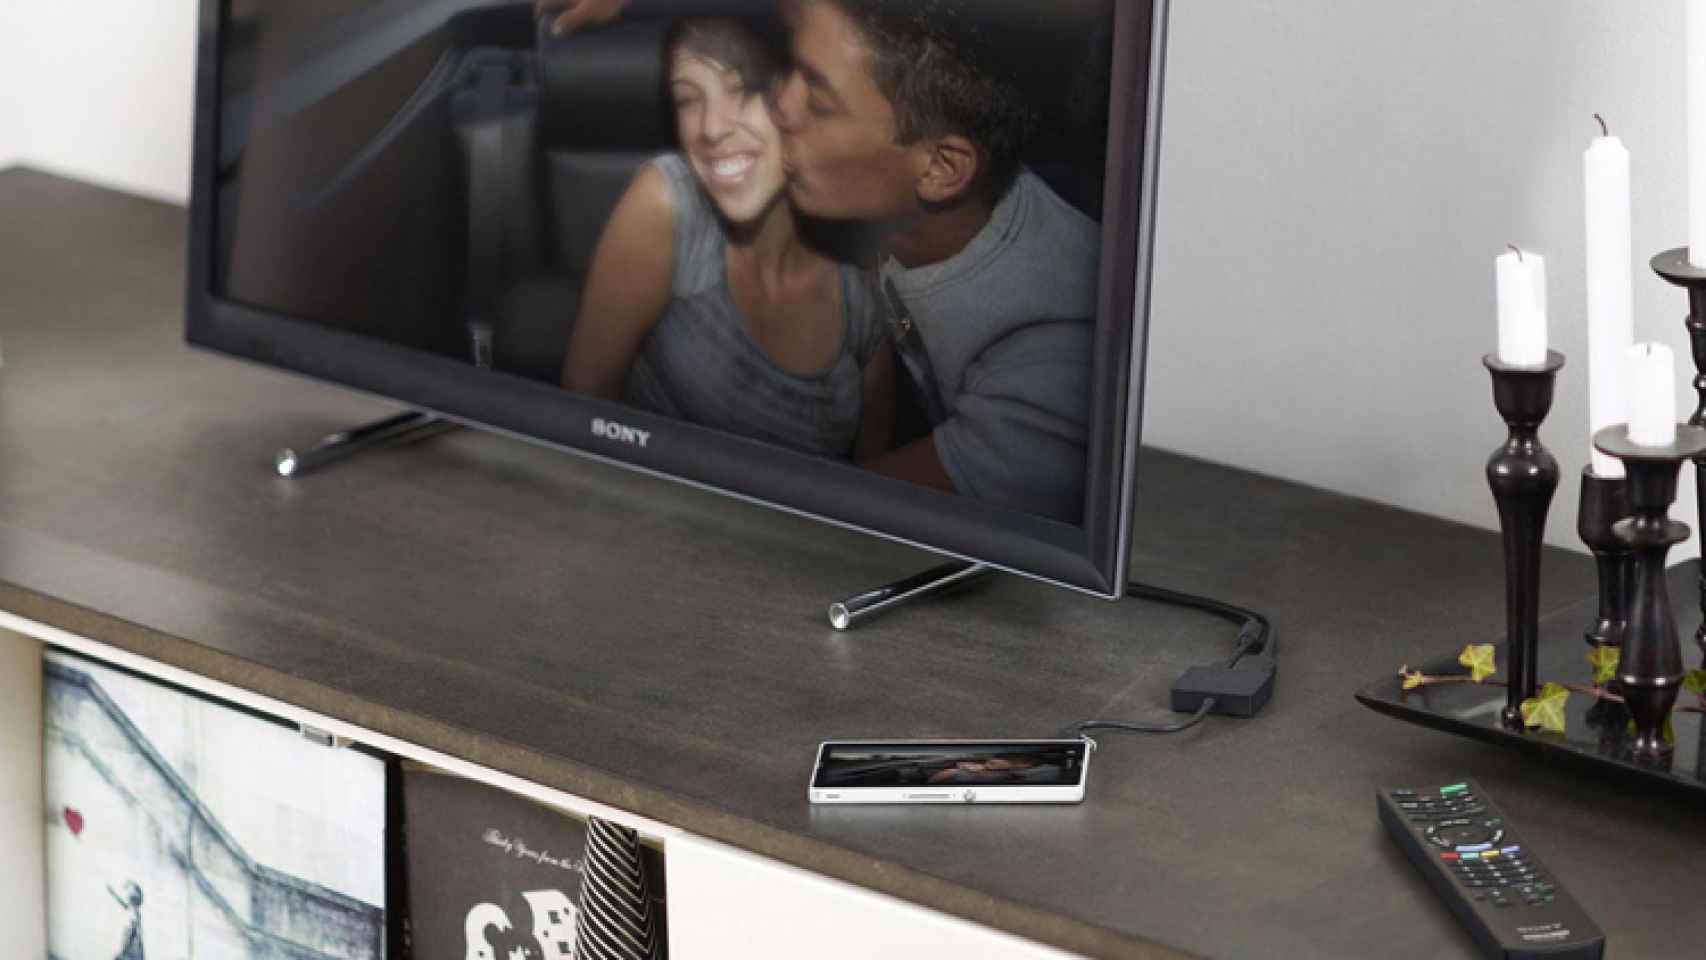 Вывести со смартфона на телевизор. Sony im750. DLNA LG Smart TV. DEXP 24 дюйма телевизор Smart TV. Телевизор через смартфон.